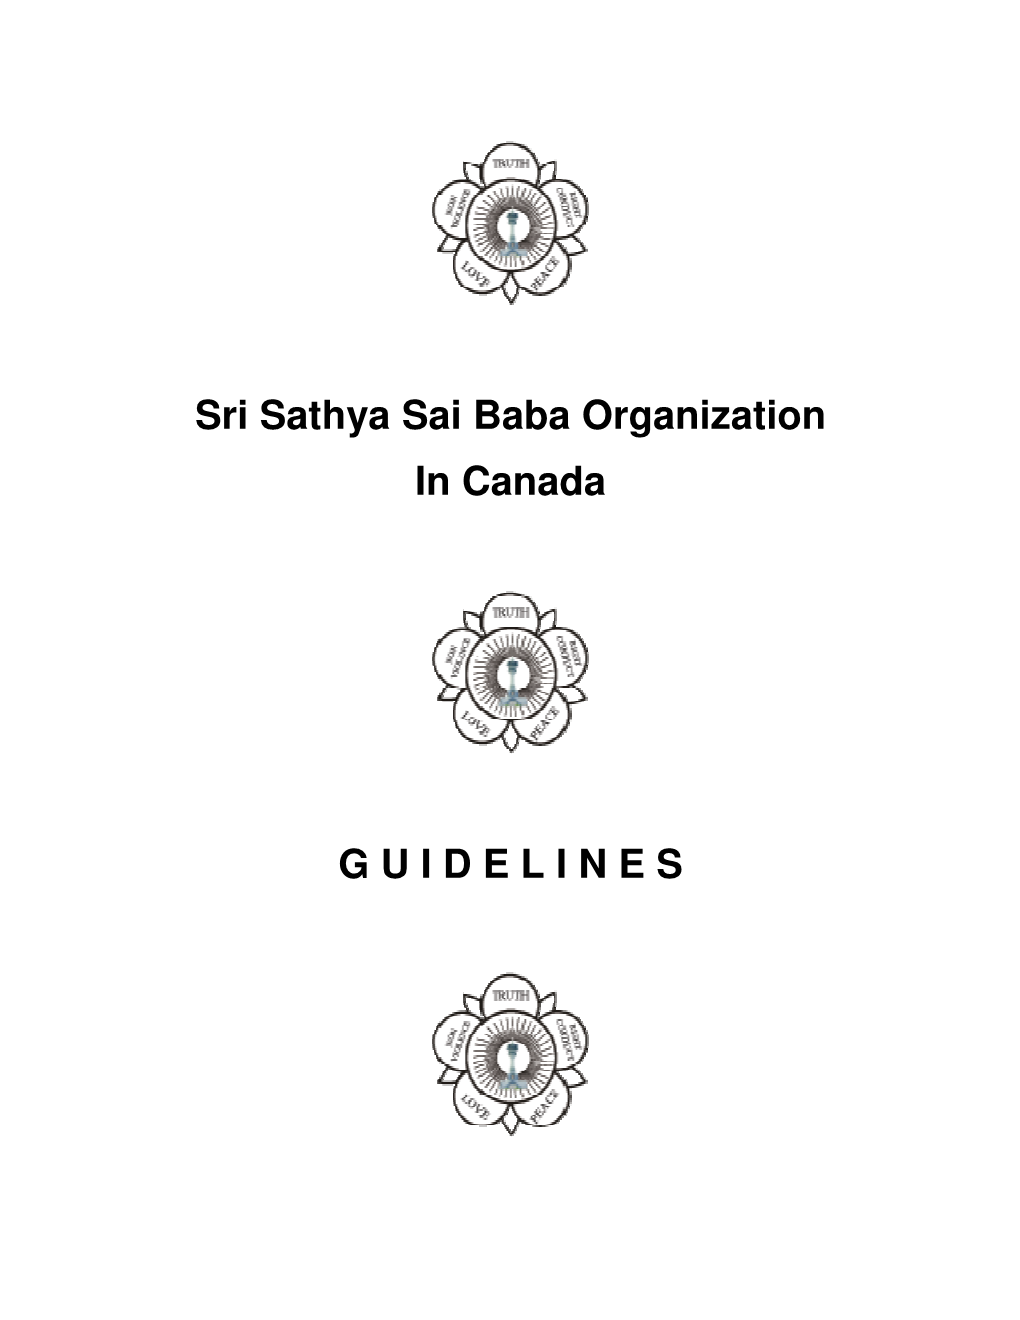 Sri Sathya Sai Baba Organization in Canada G U I D E L I N